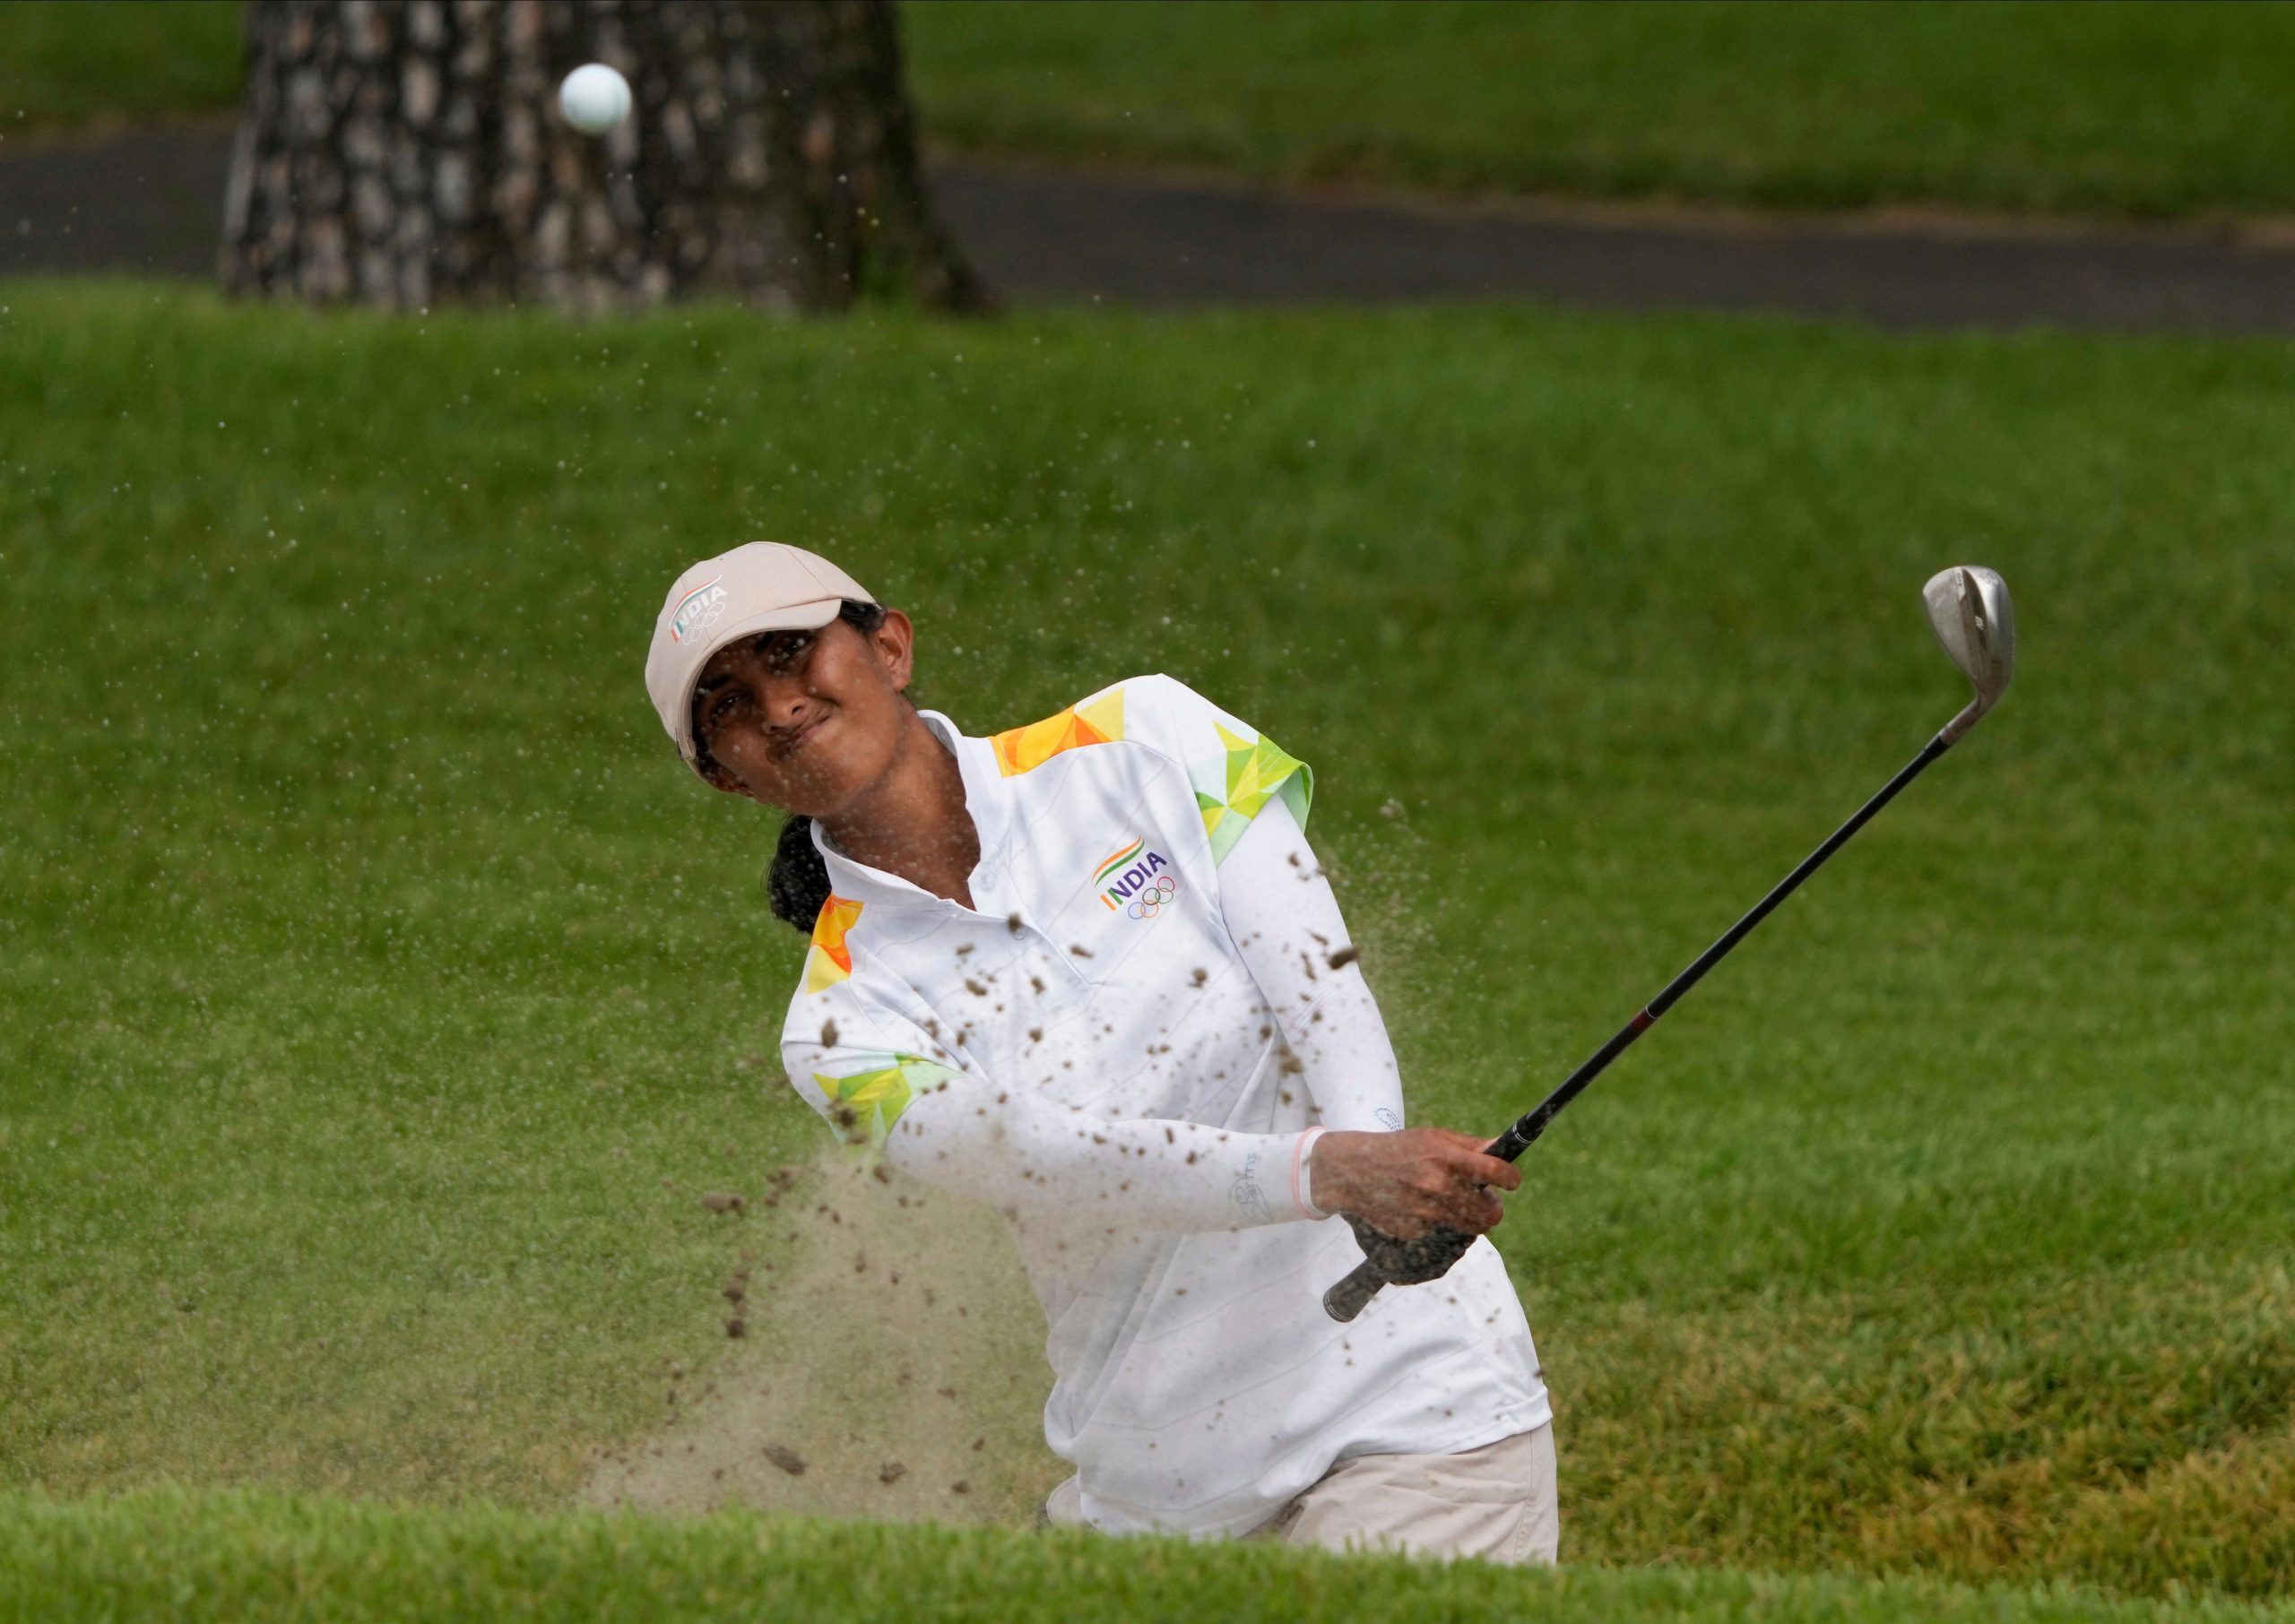 India’s Olympic golf star Aditi Ashok qualifies for Women’s British Open